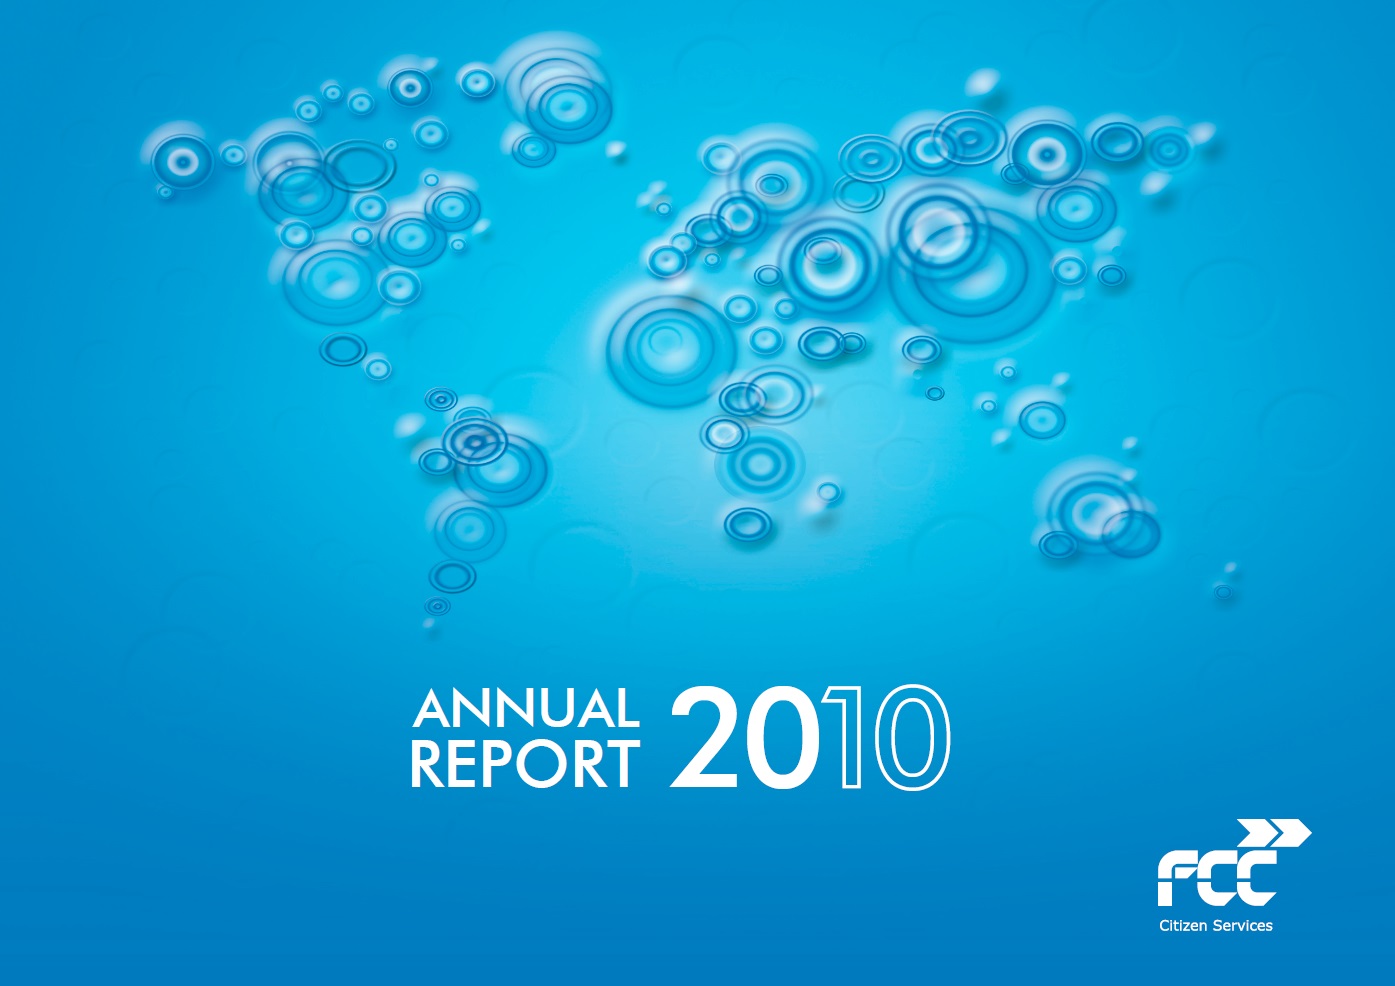 Complete Annual Report